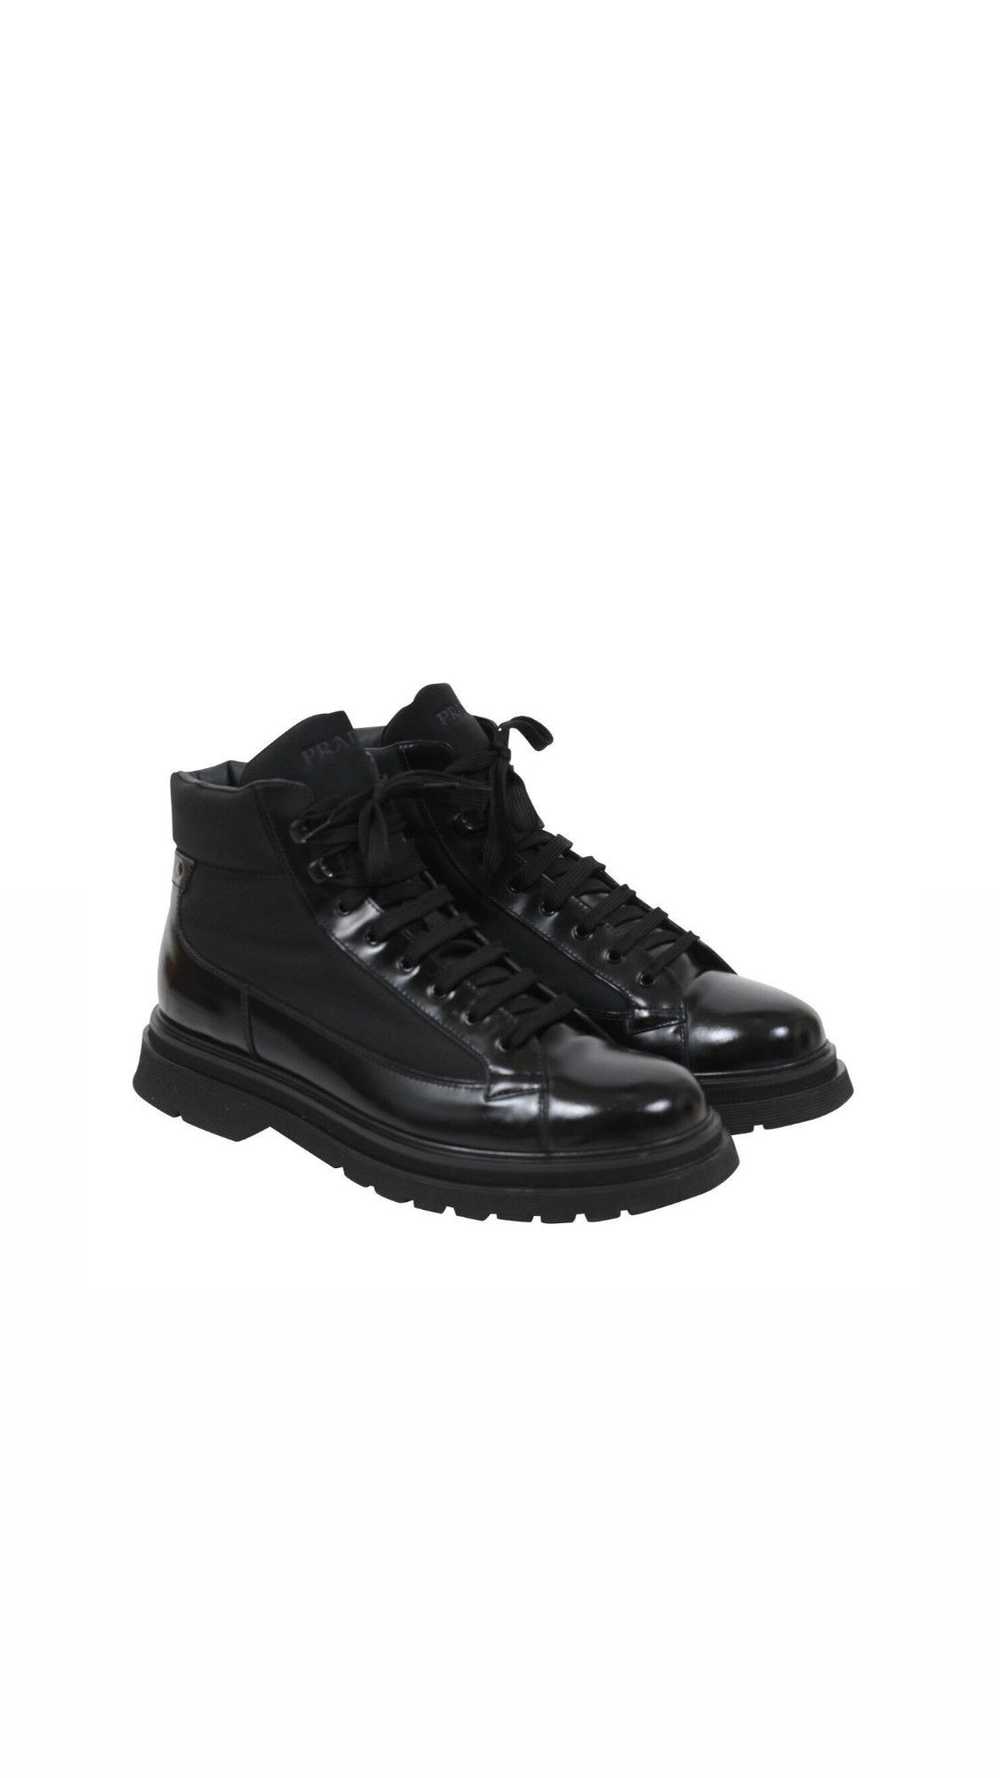 Prada Combat Boots Black Leather - 02056 - image 1